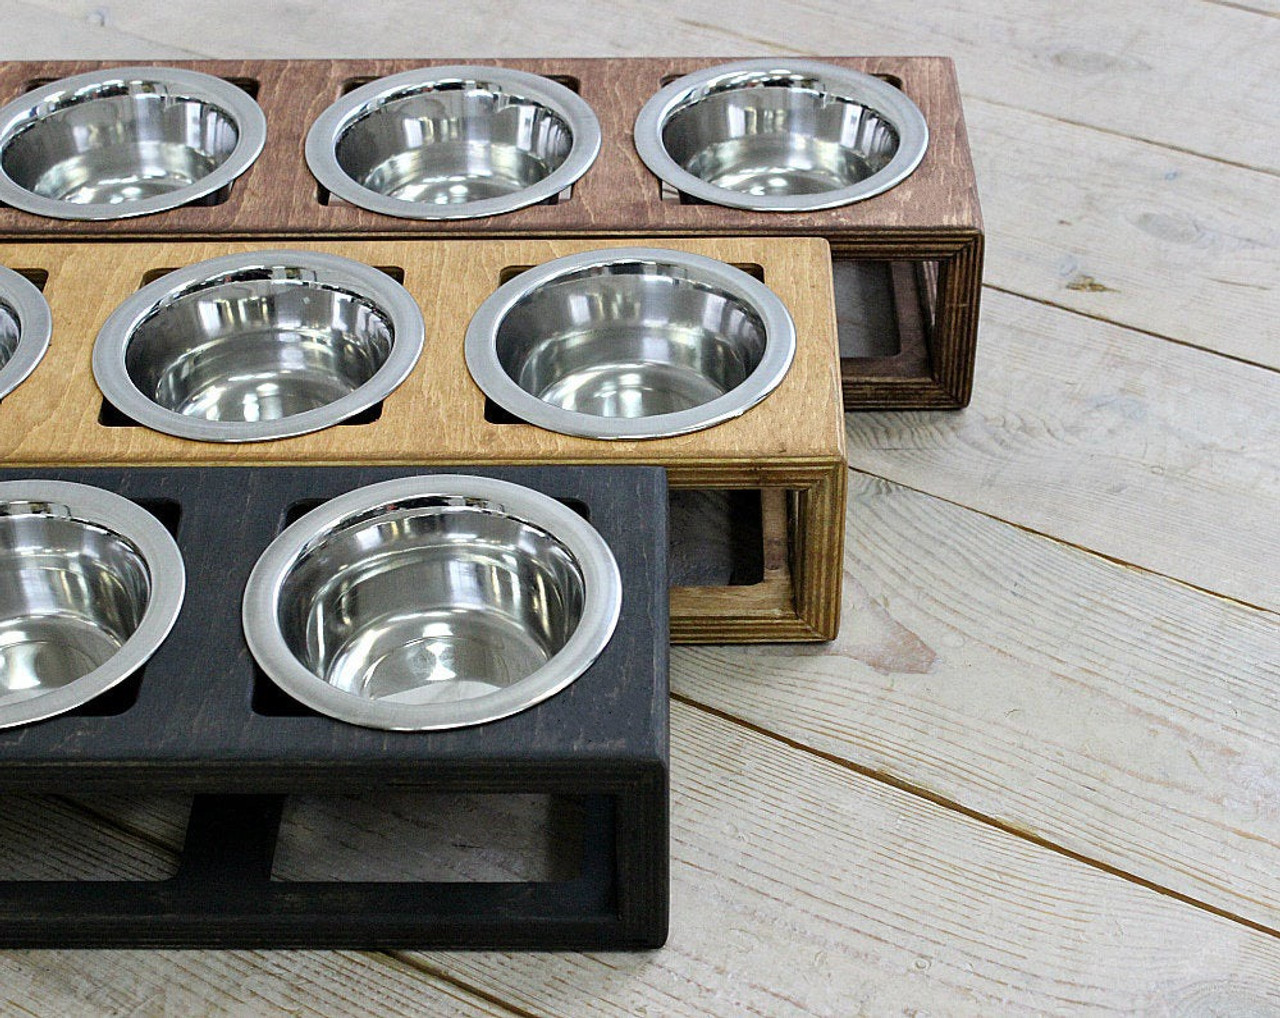 Elevated Dog Bowl - Mini Dog Food and Water Dish